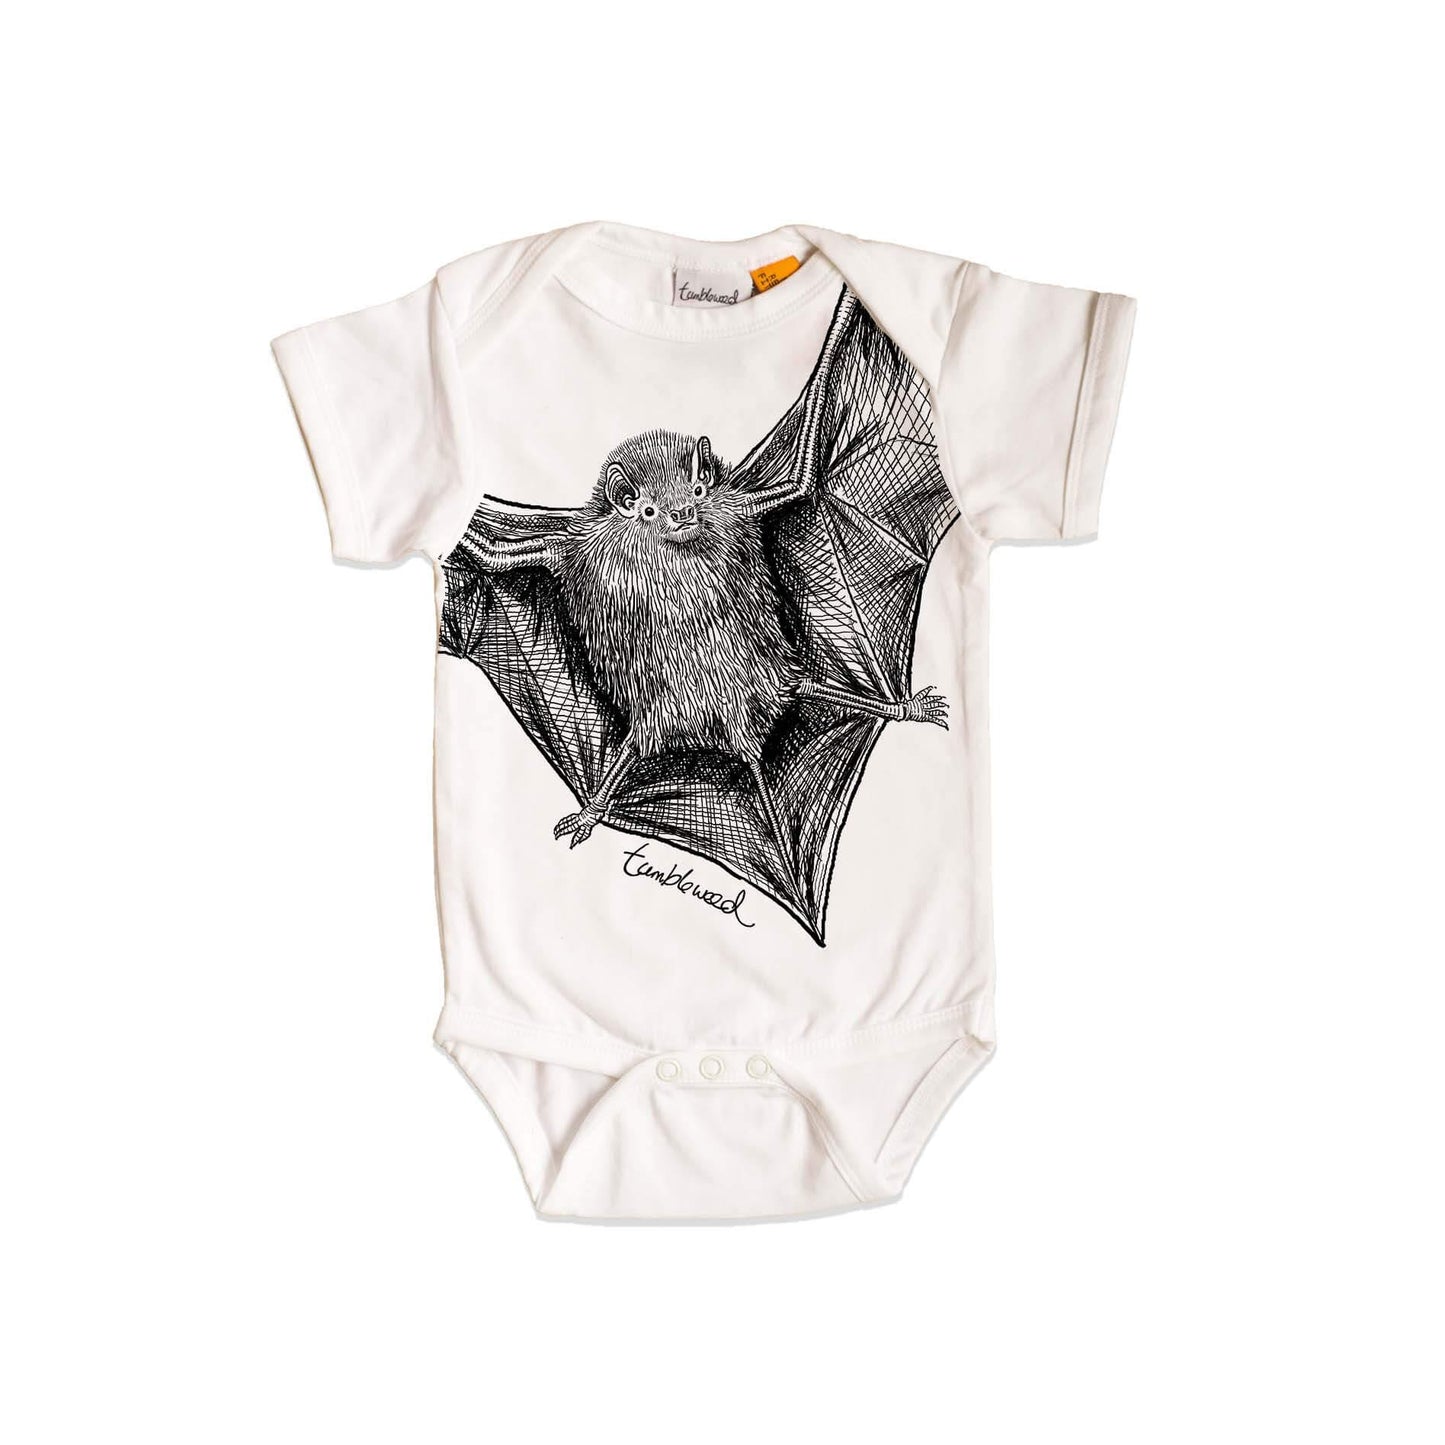 Short sleeved, white, organic cotton, baby onesie featuring a screen printed bat/pekapeka design.